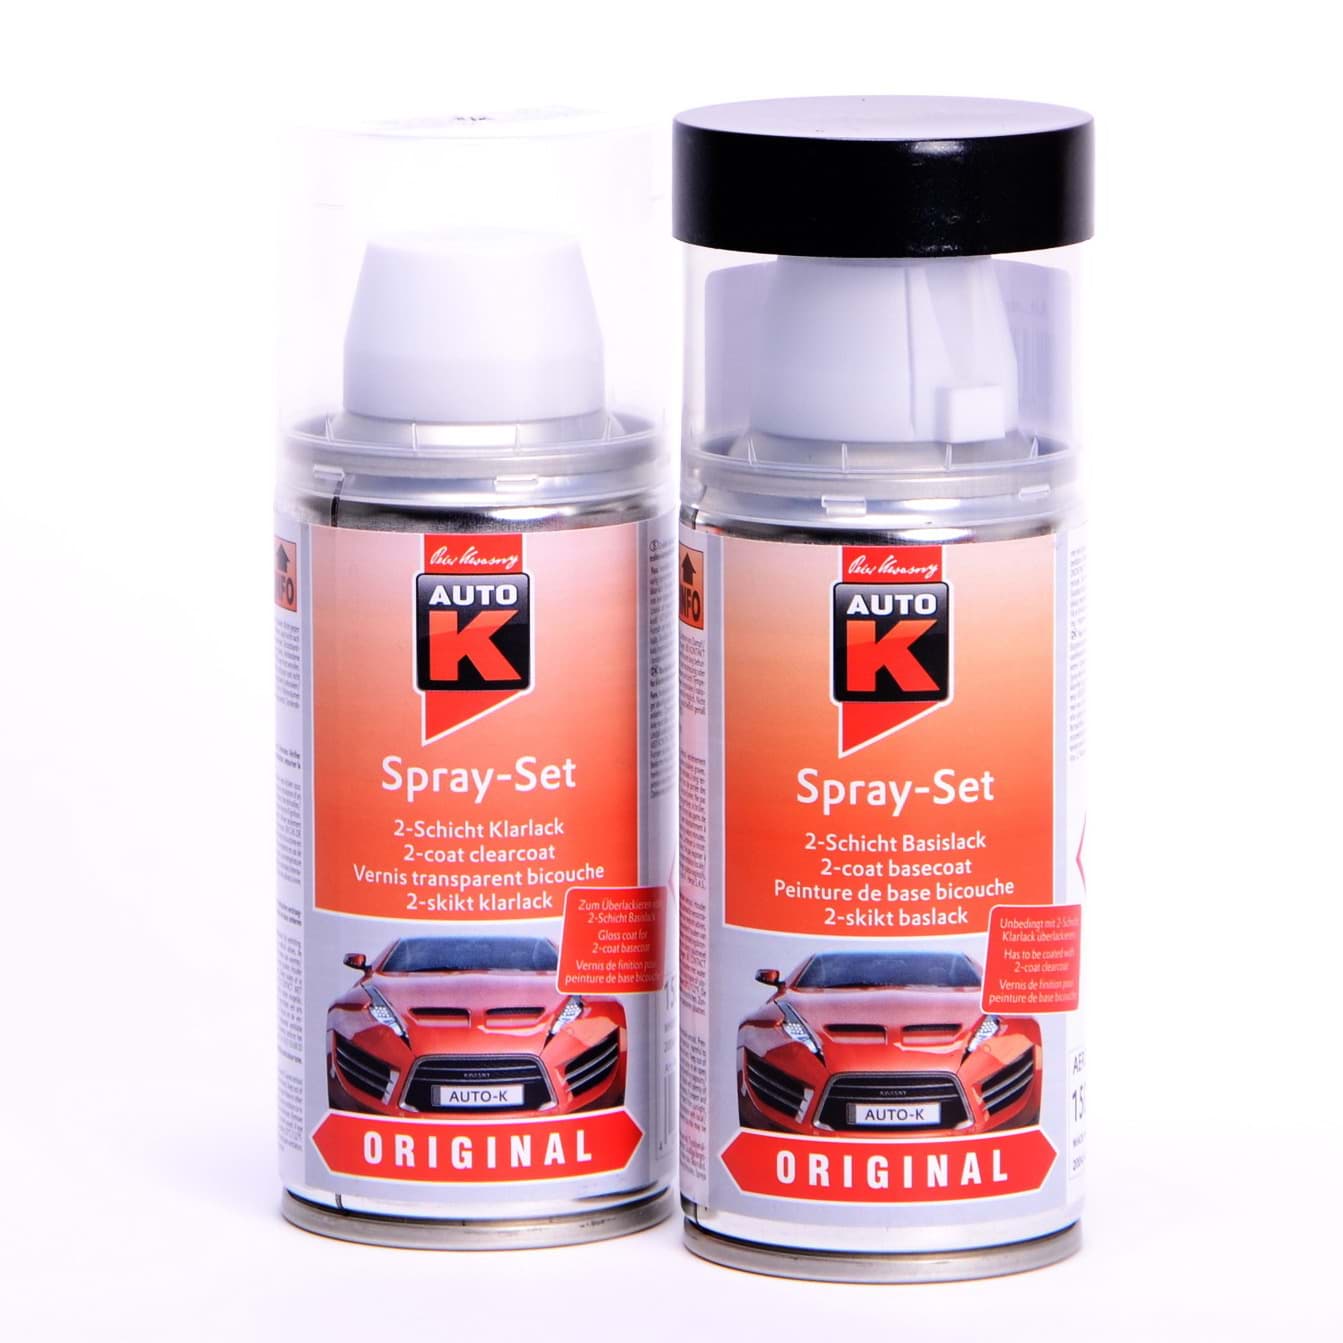 Auto-K Spray-Set Autolack für Volkswagen, VW, Audi LD5D Chagallblau 20777 resmi